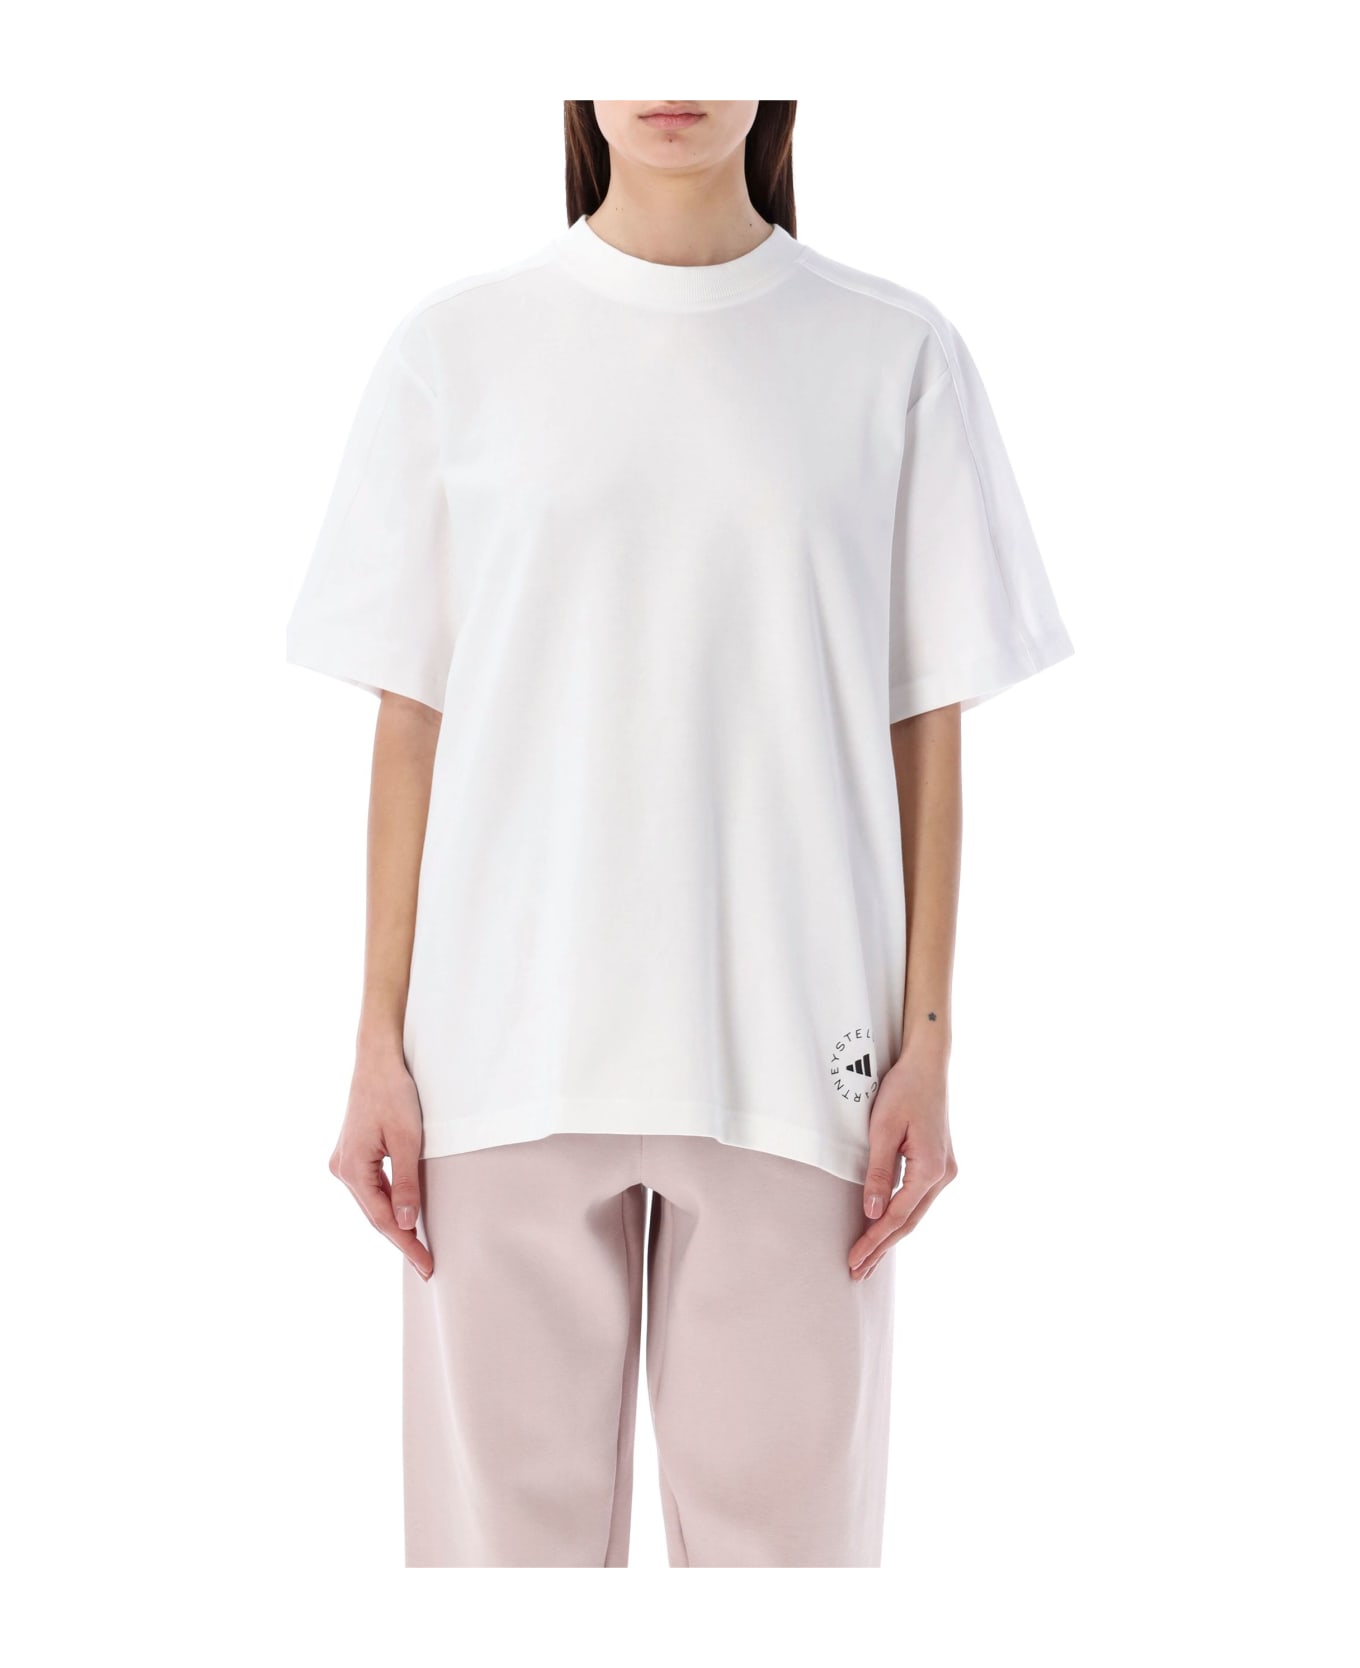 Adidas by Stella McCartney Truecasuals Logo T-shirt - WHITE Tシャツ